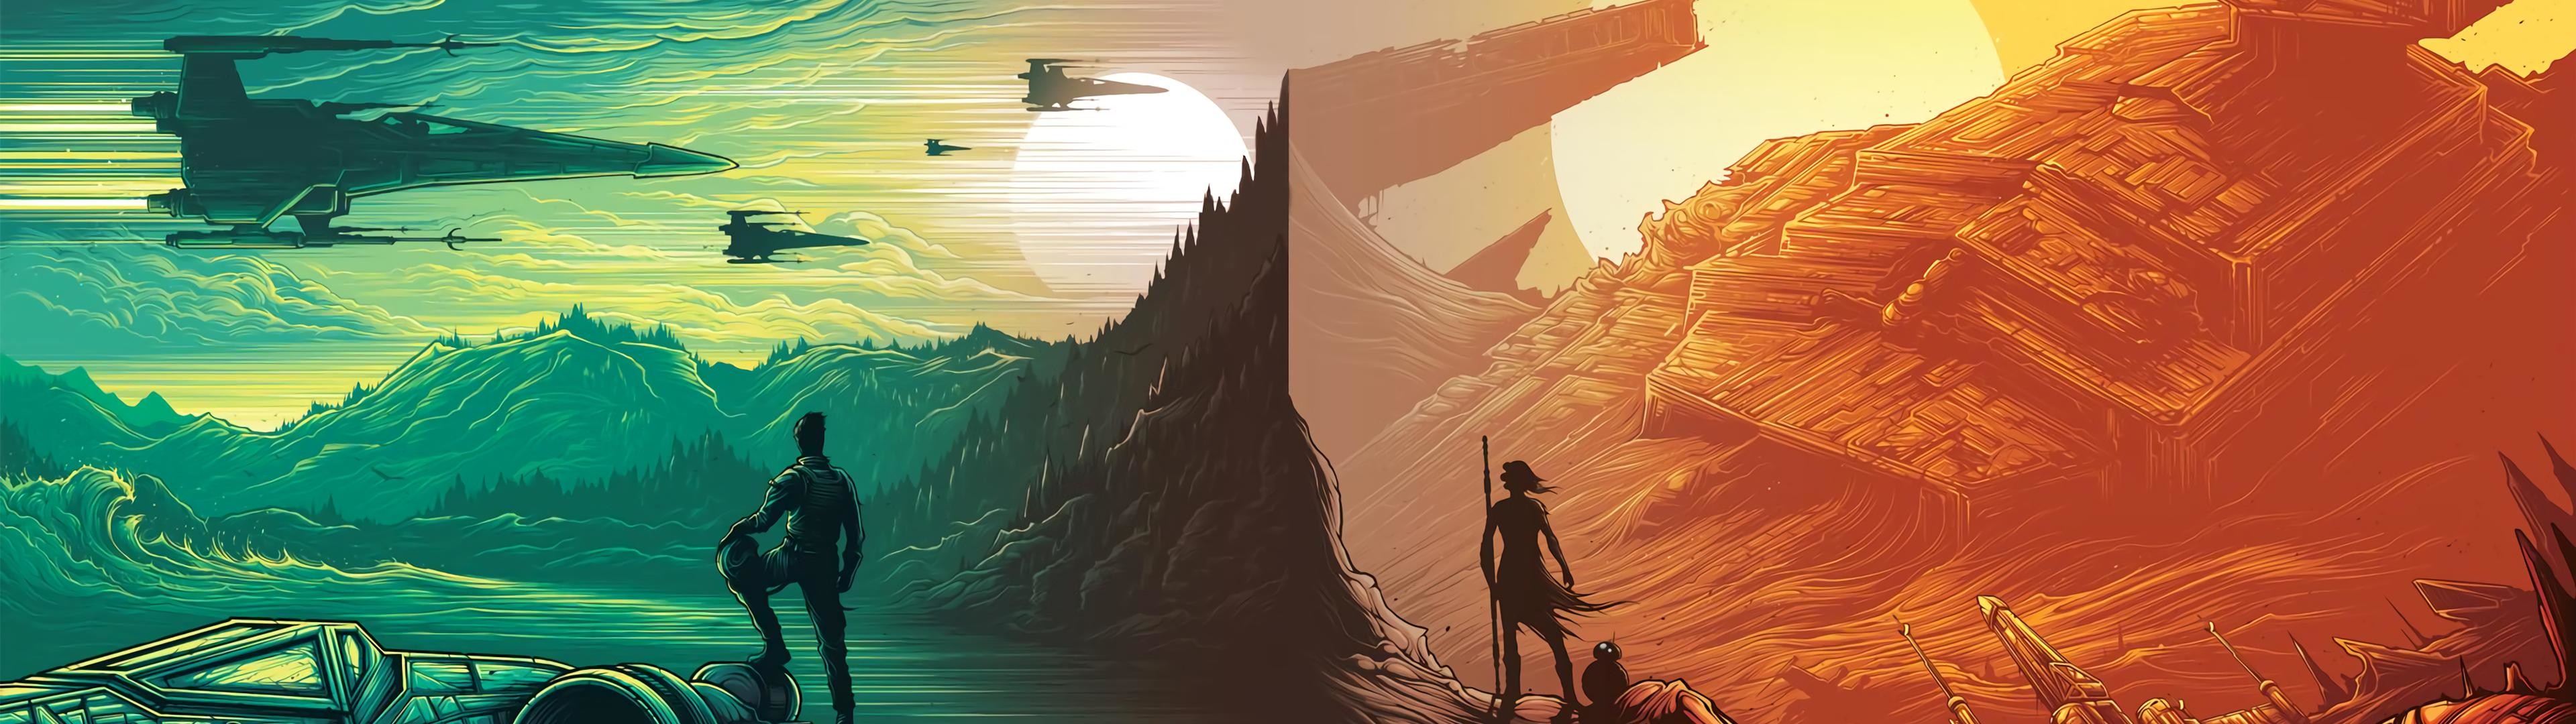 star wars dual screen wallpaper,action adventure game,illustration,sky,art,cg artwork